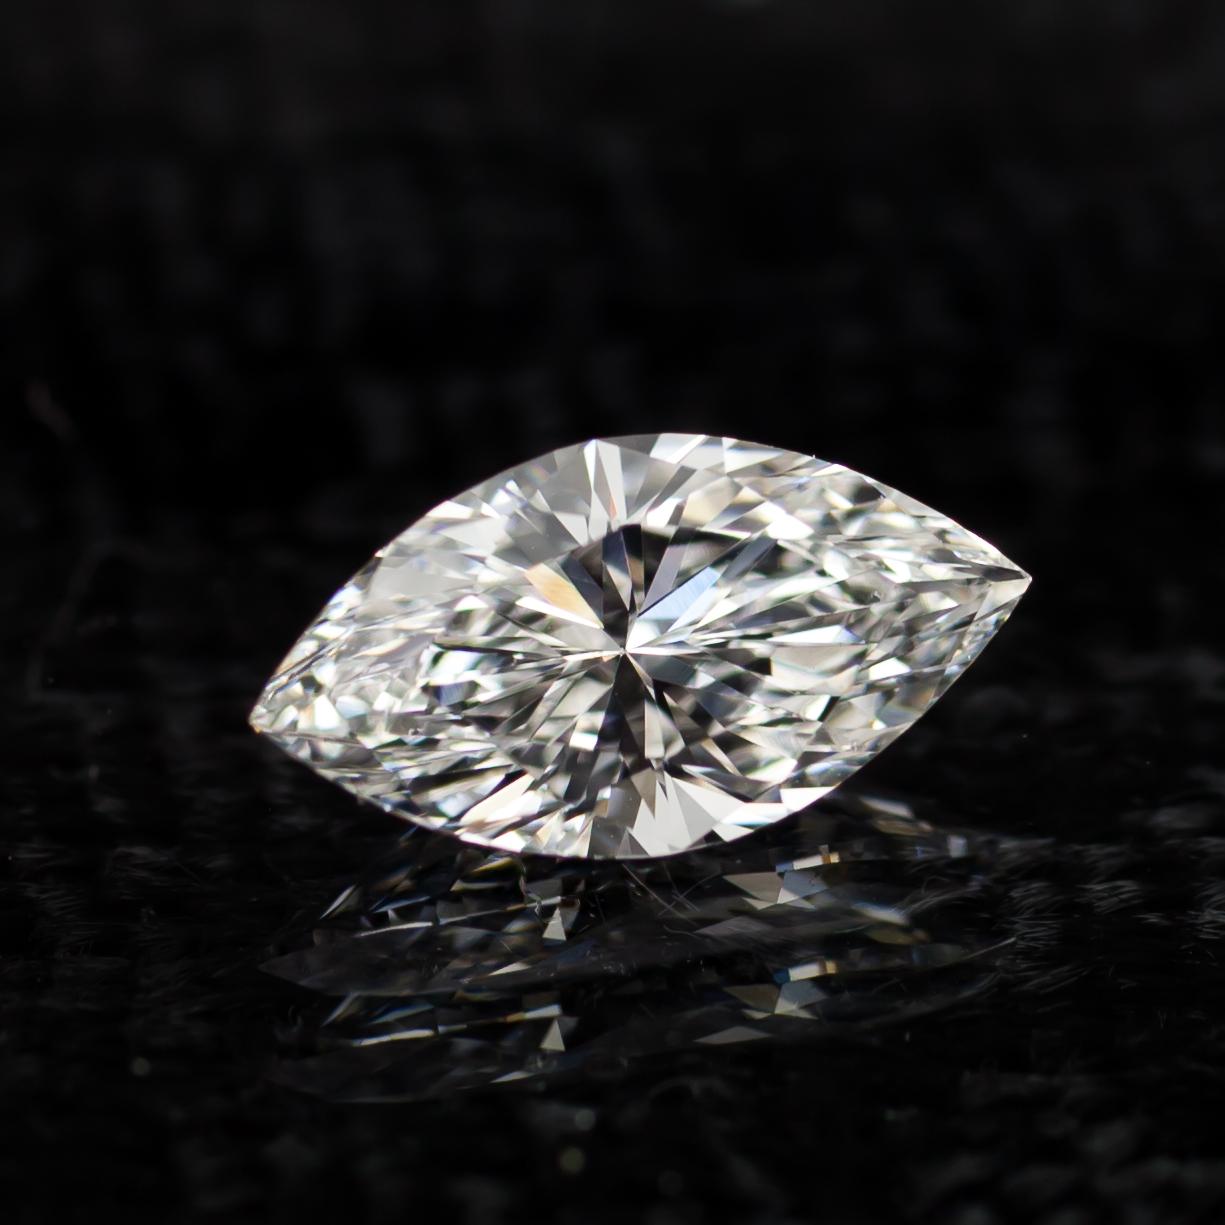 Moderne Diamant taille brillant marquise non serti de 1,08 carat F / VS2 certifié GIA en vente